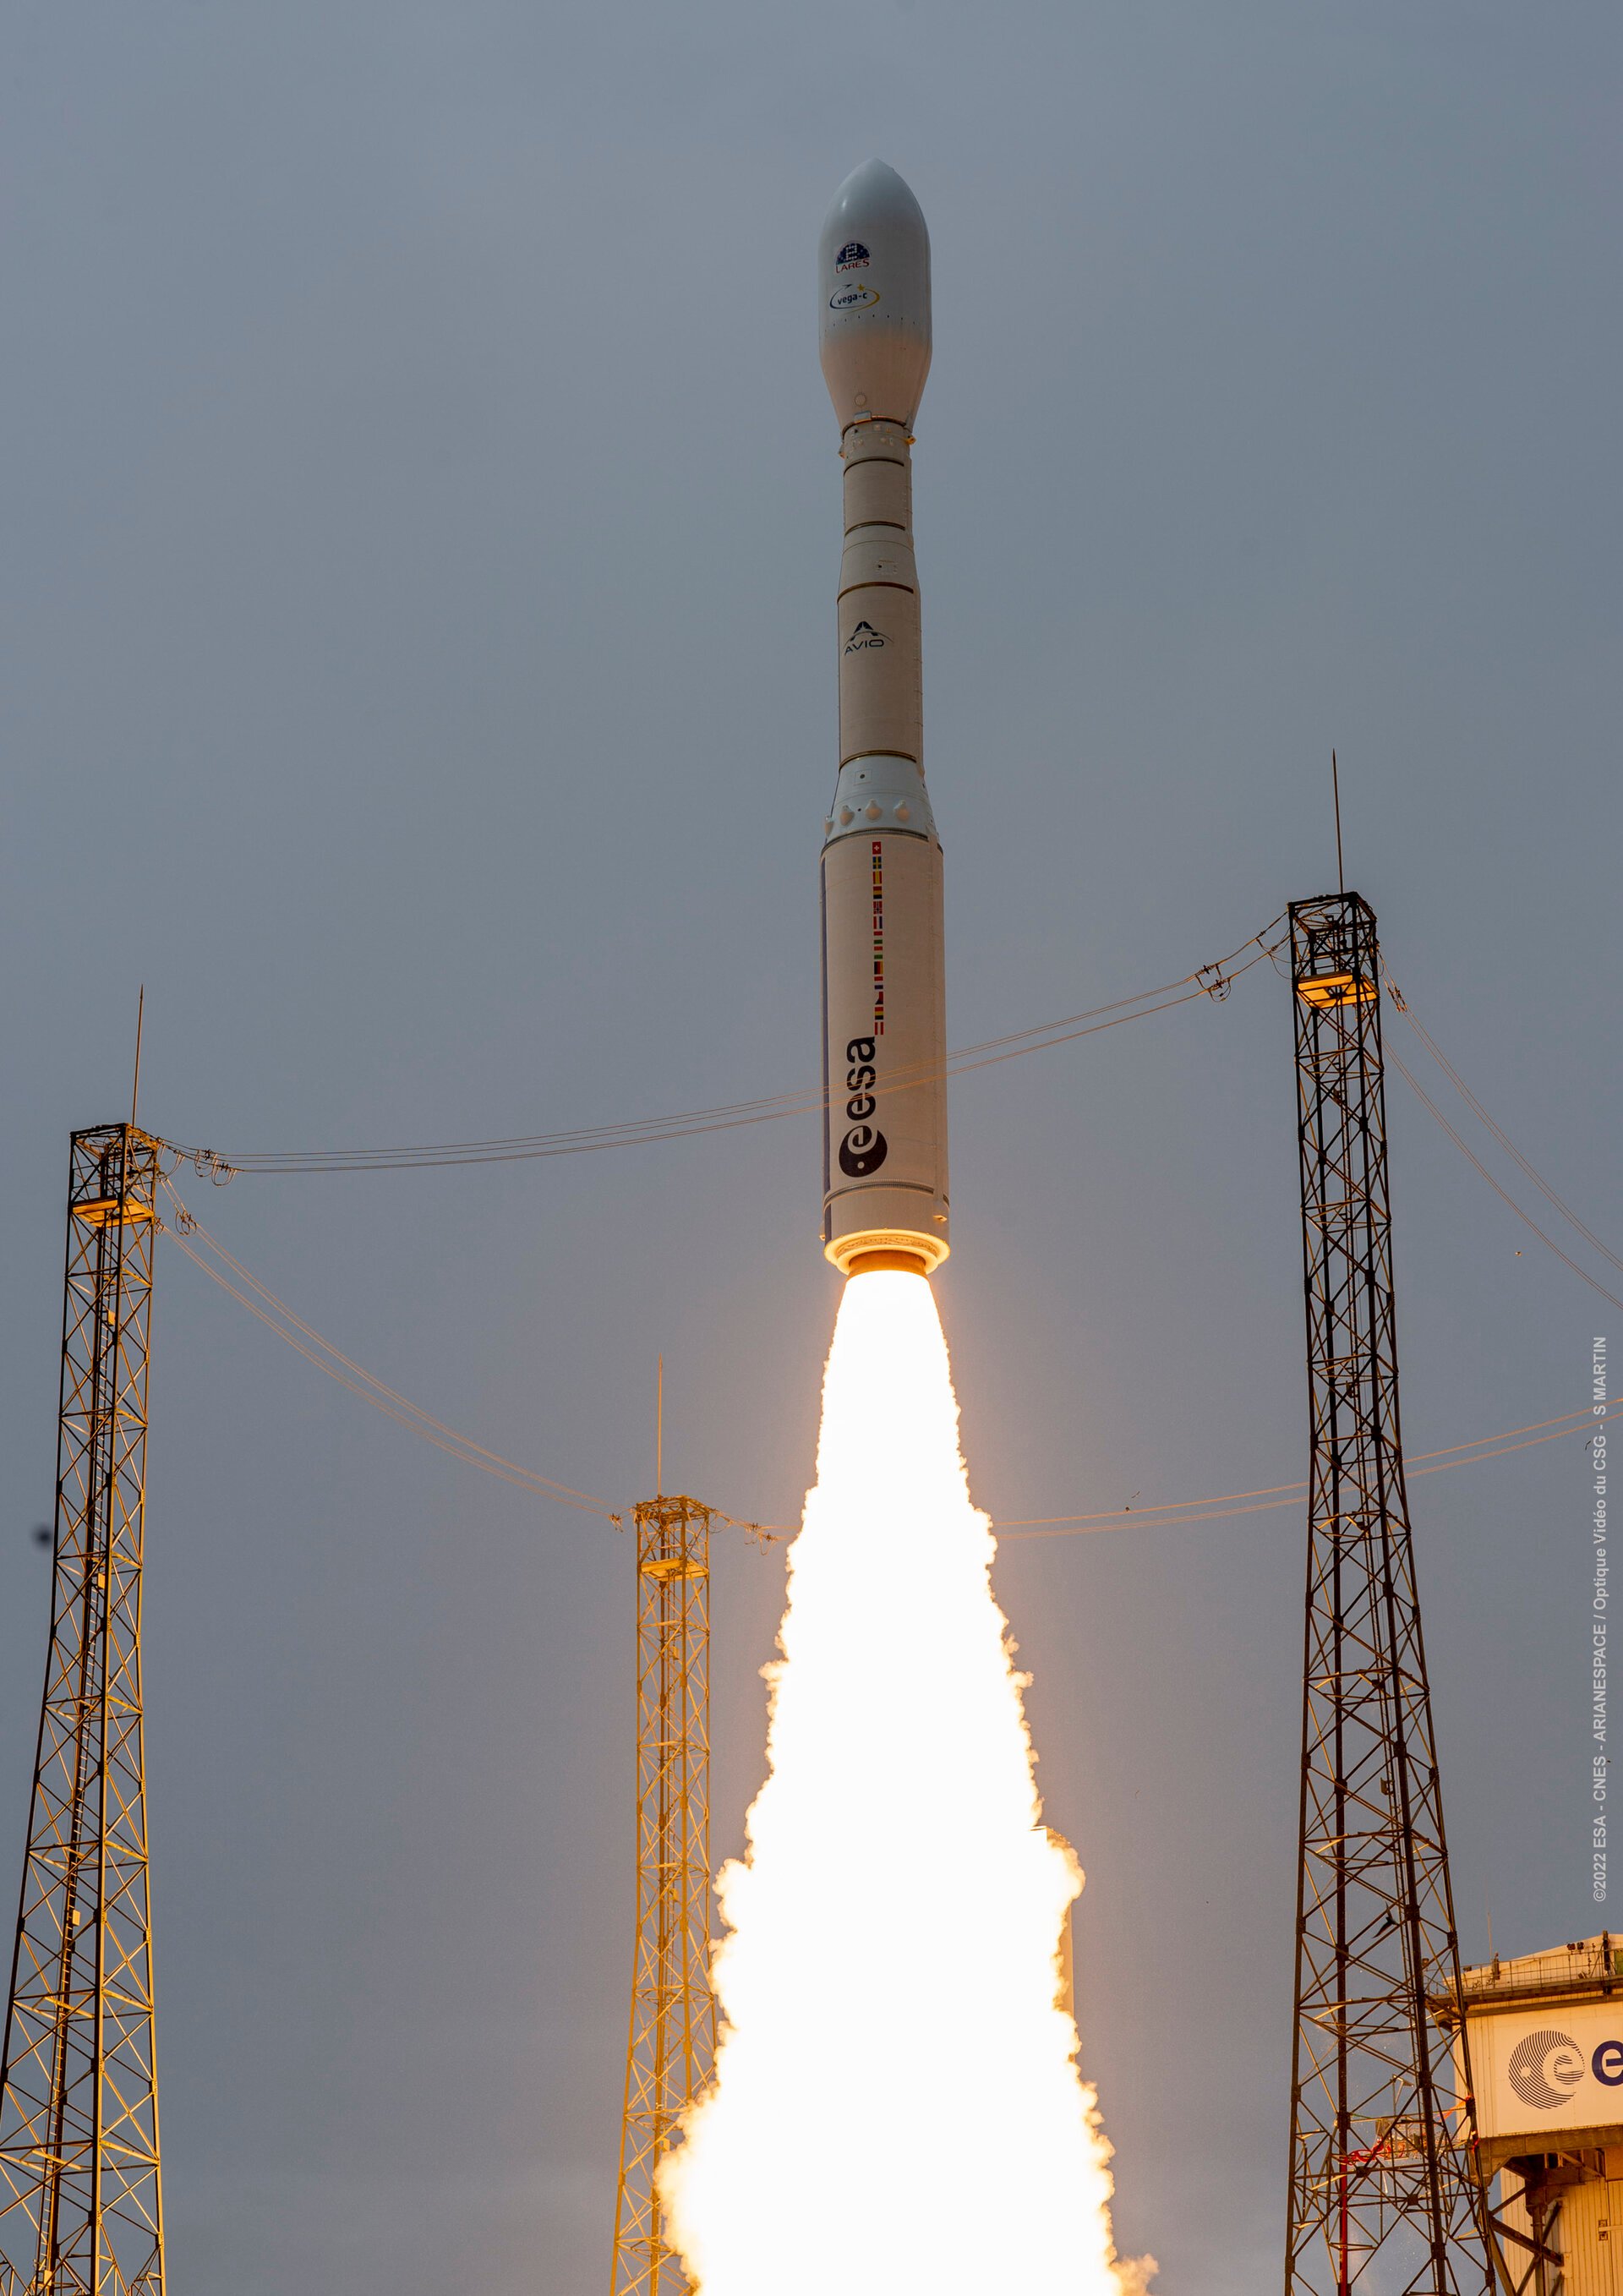 ESA Council decisions set the stage for more diverse European launch services